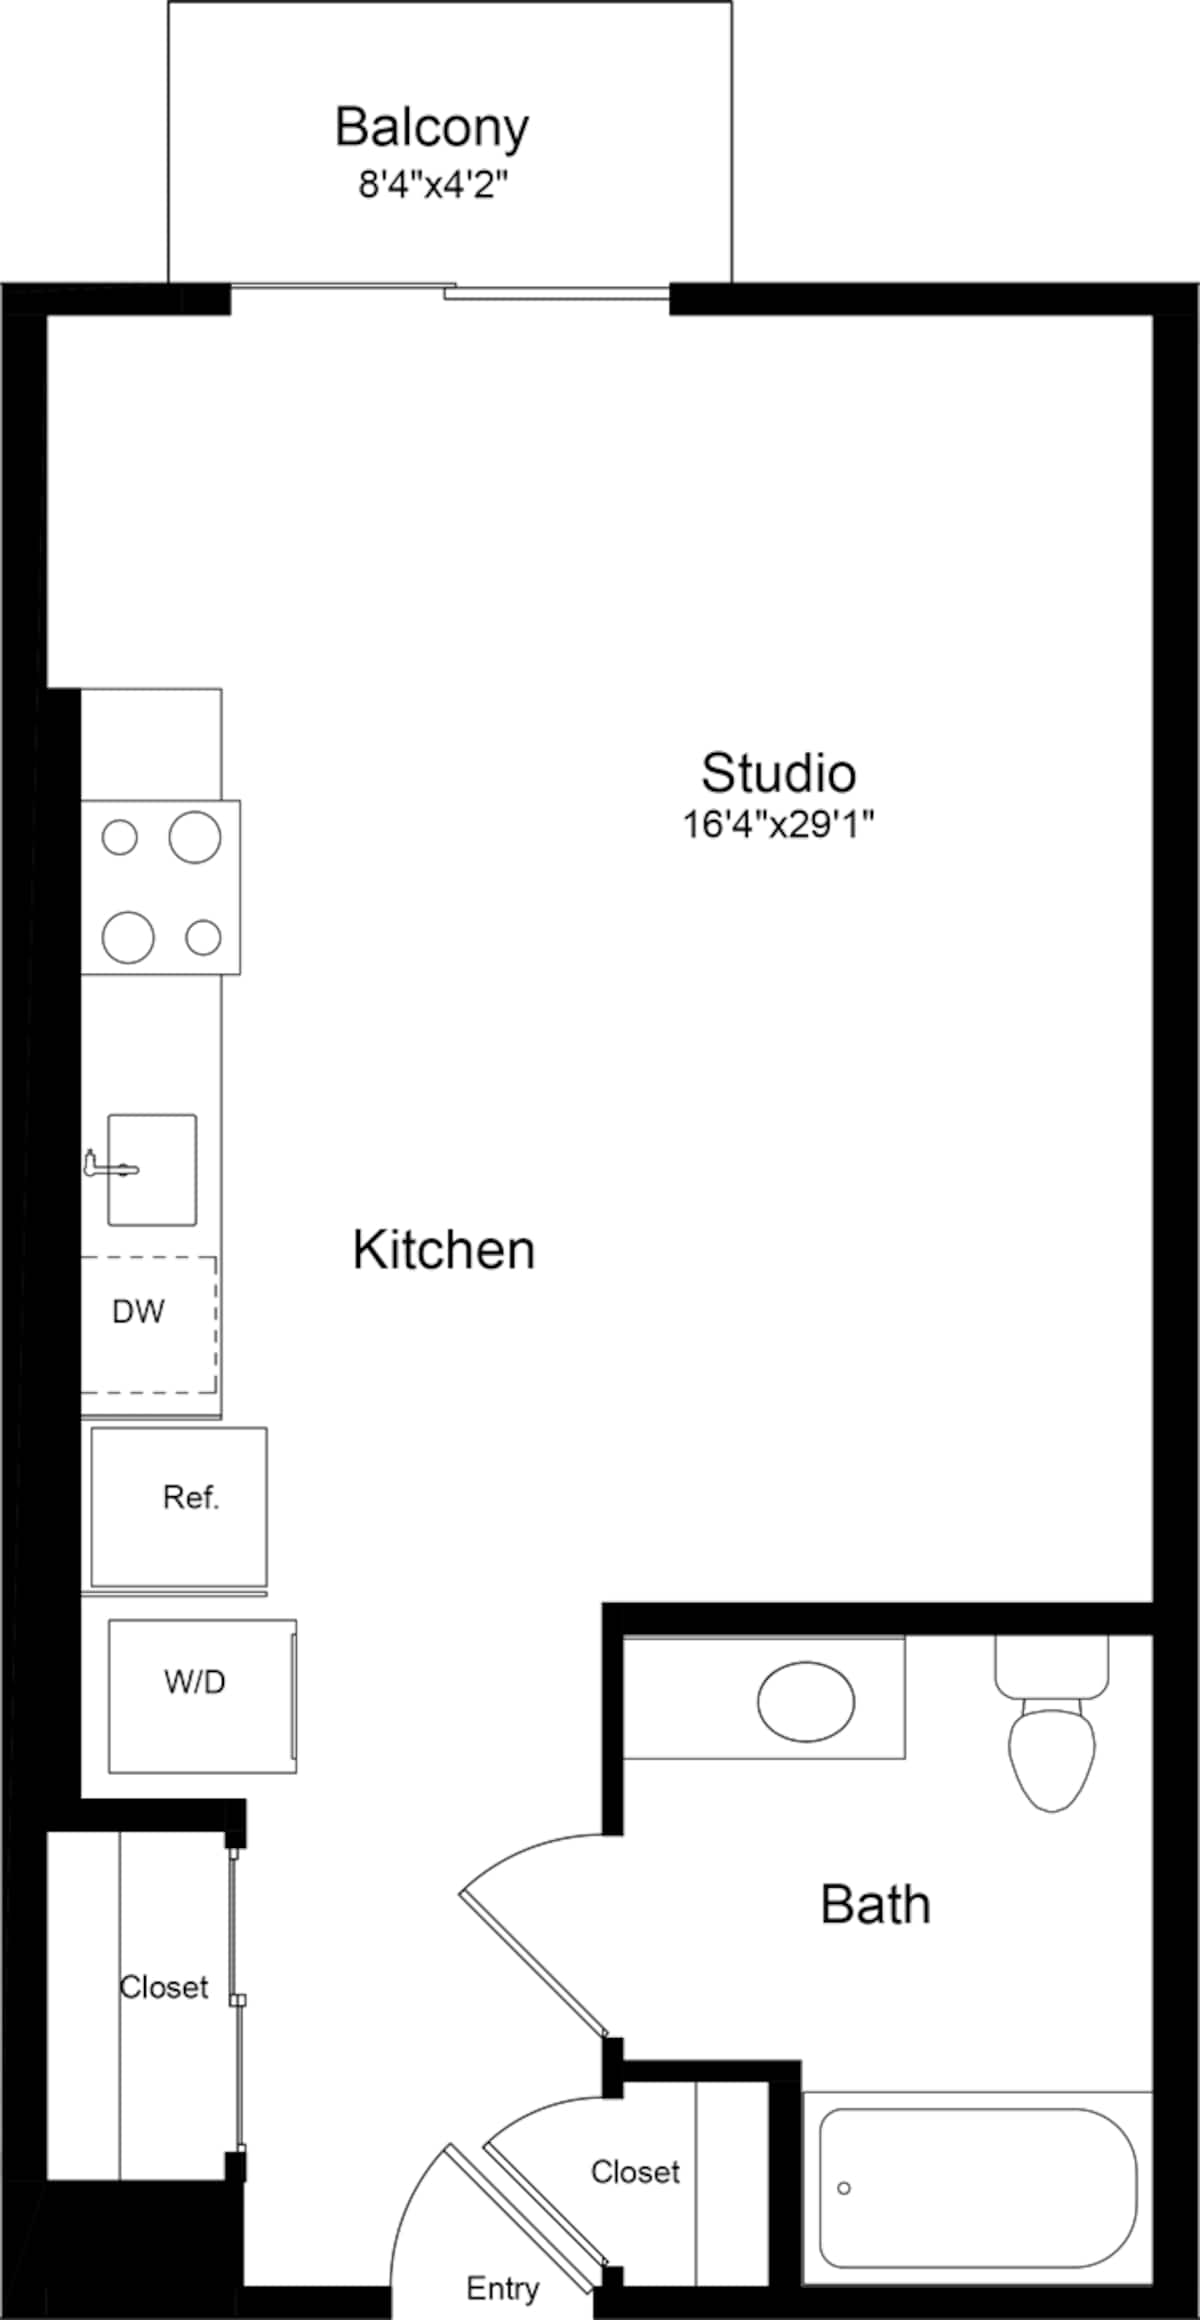 Floorplan diagram for S2 with Balcony, showing Studio